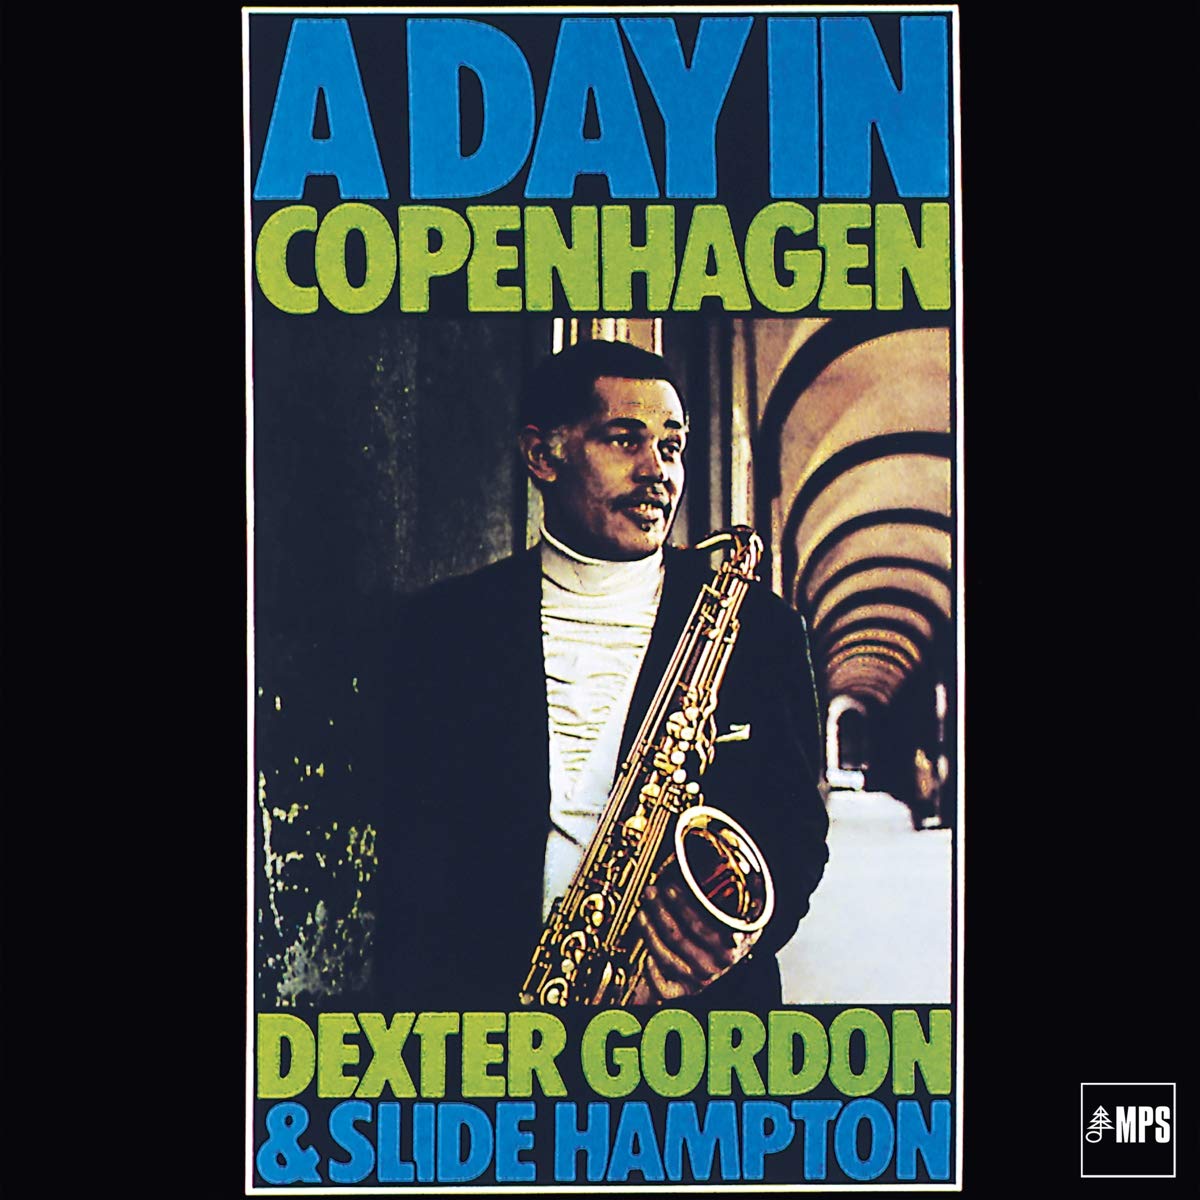 Dexter Gordon & Slide Hampton - A Day in Copenhagen (Vinyl LP)